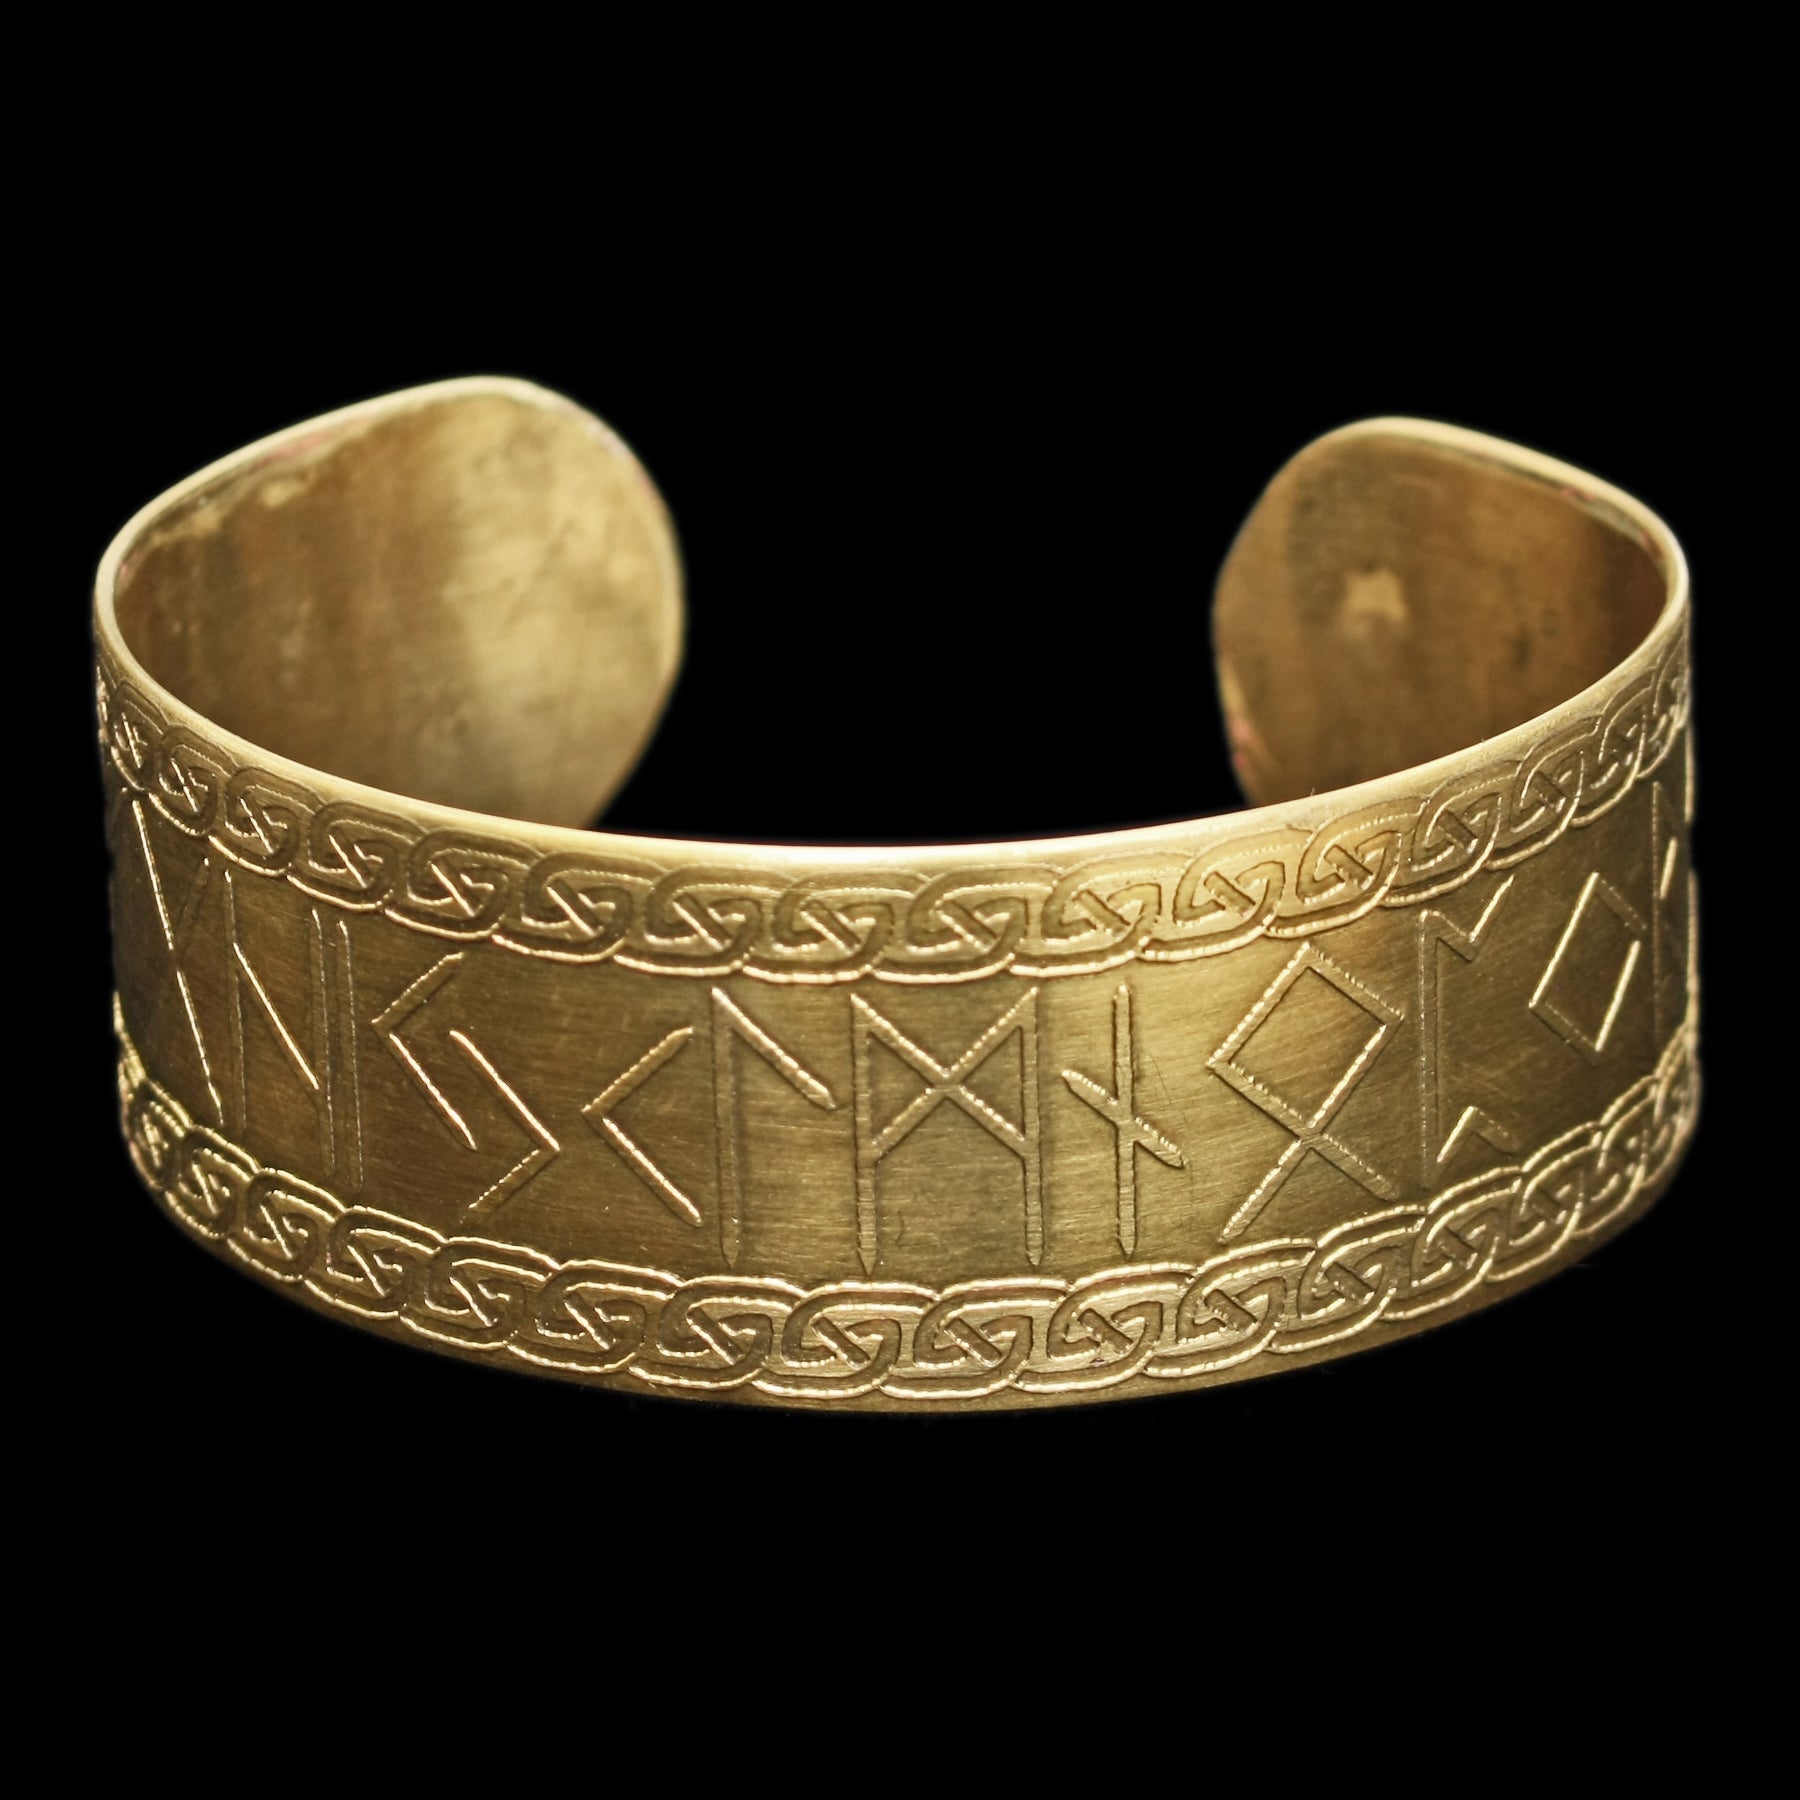 Elder Futhark Runic Cuff Bracelet - Viking Jewelry